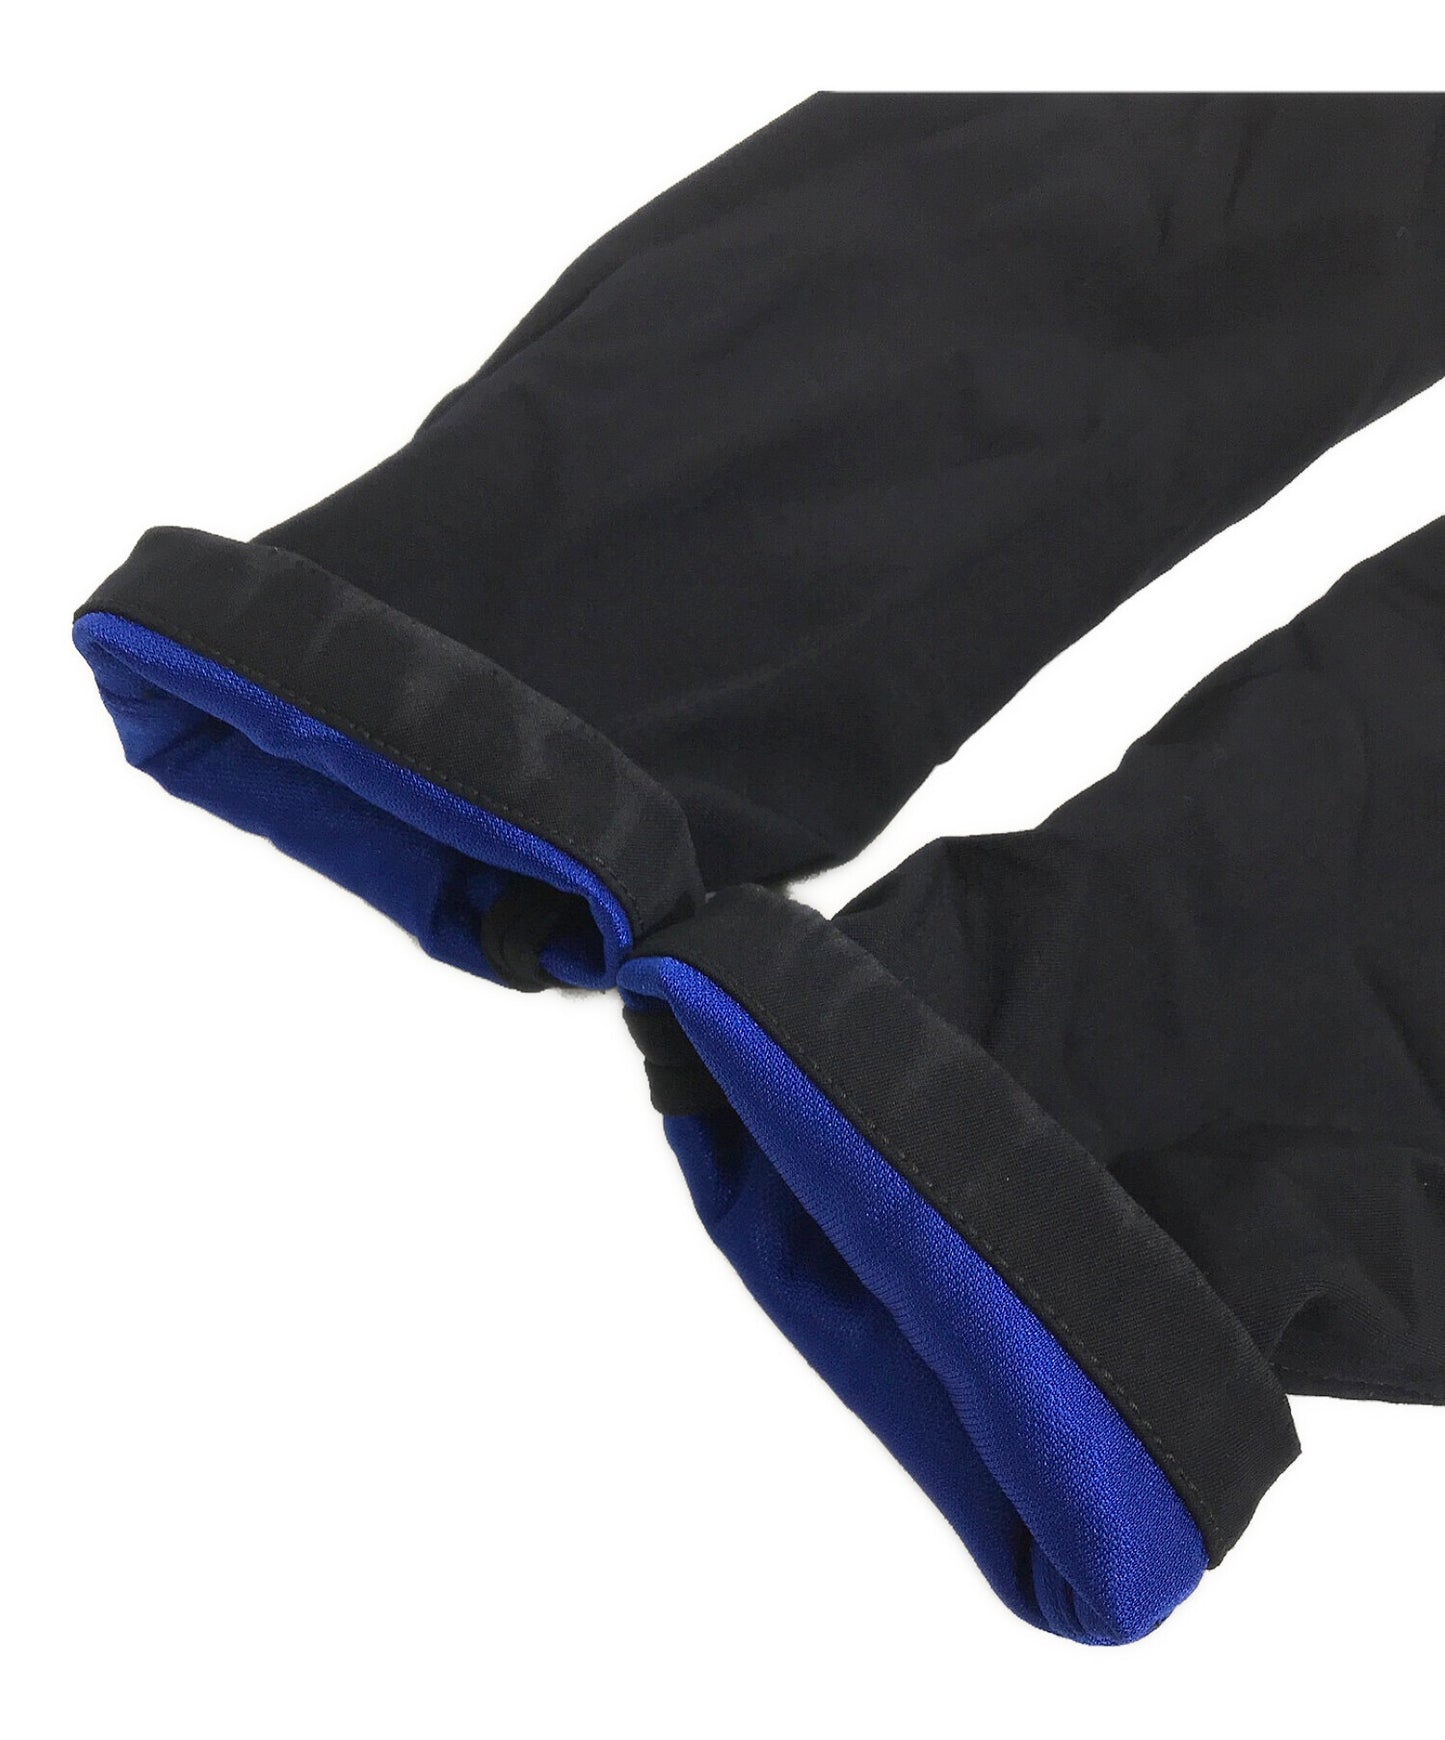 [Pre-owned] COMME des GARCONS HOMME Shrunken Wool Tailored Jacket HP-J010